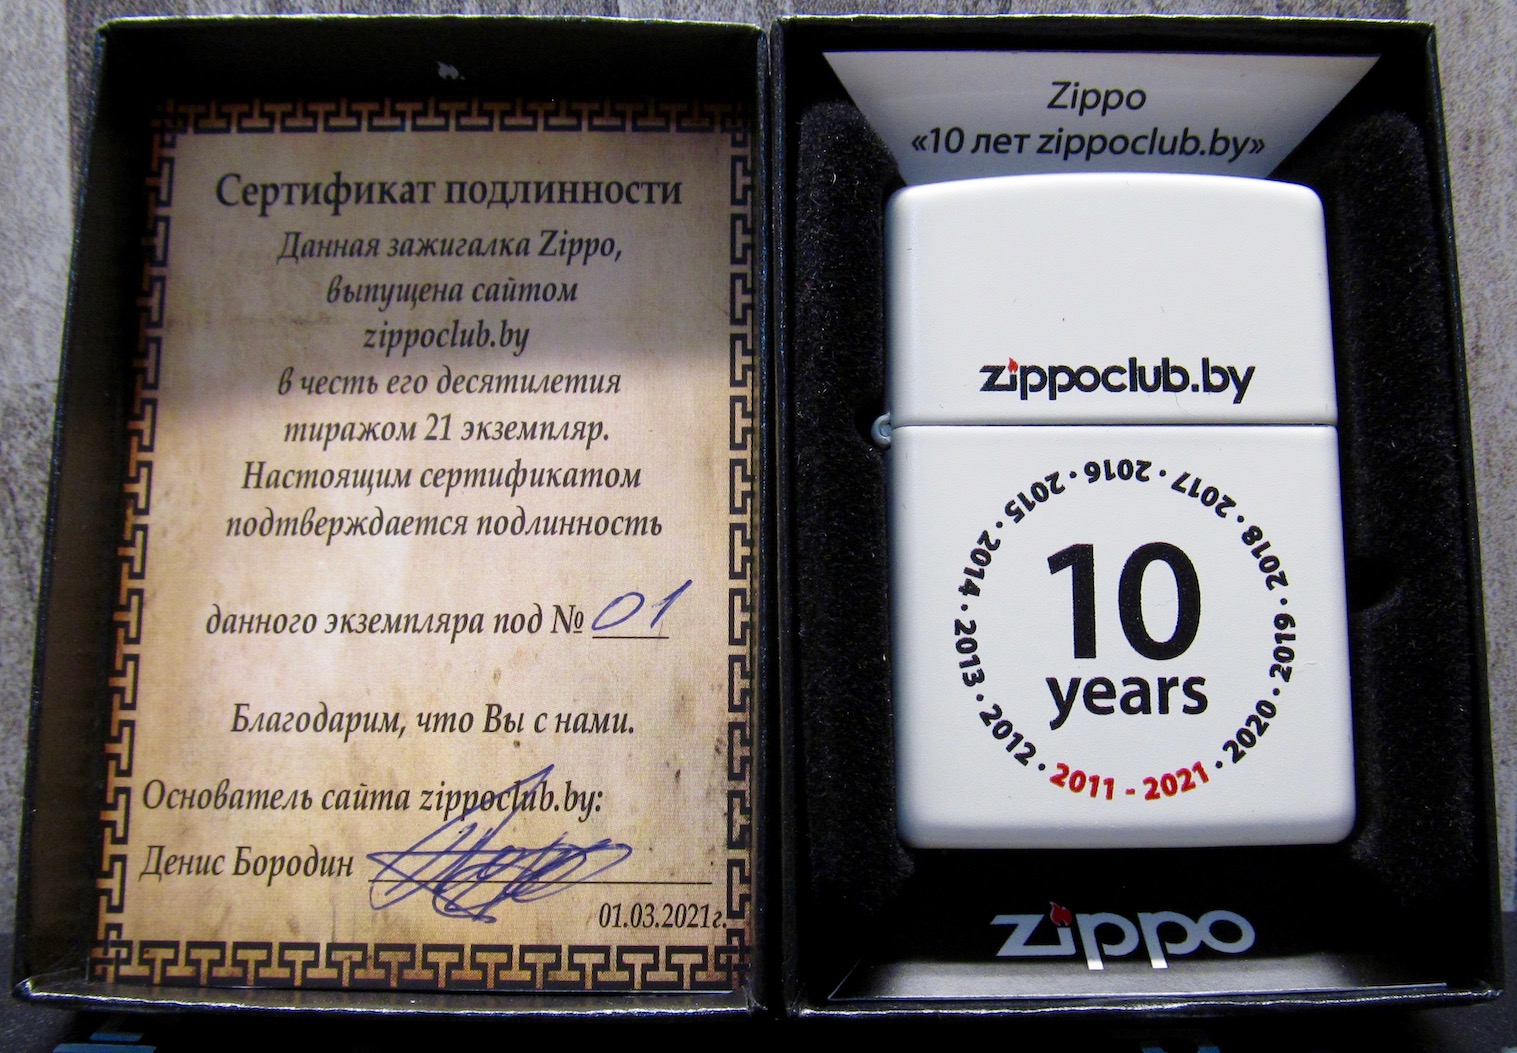 Зажигалка 10 лет zippoclub.by спереди и сертификат подлинности